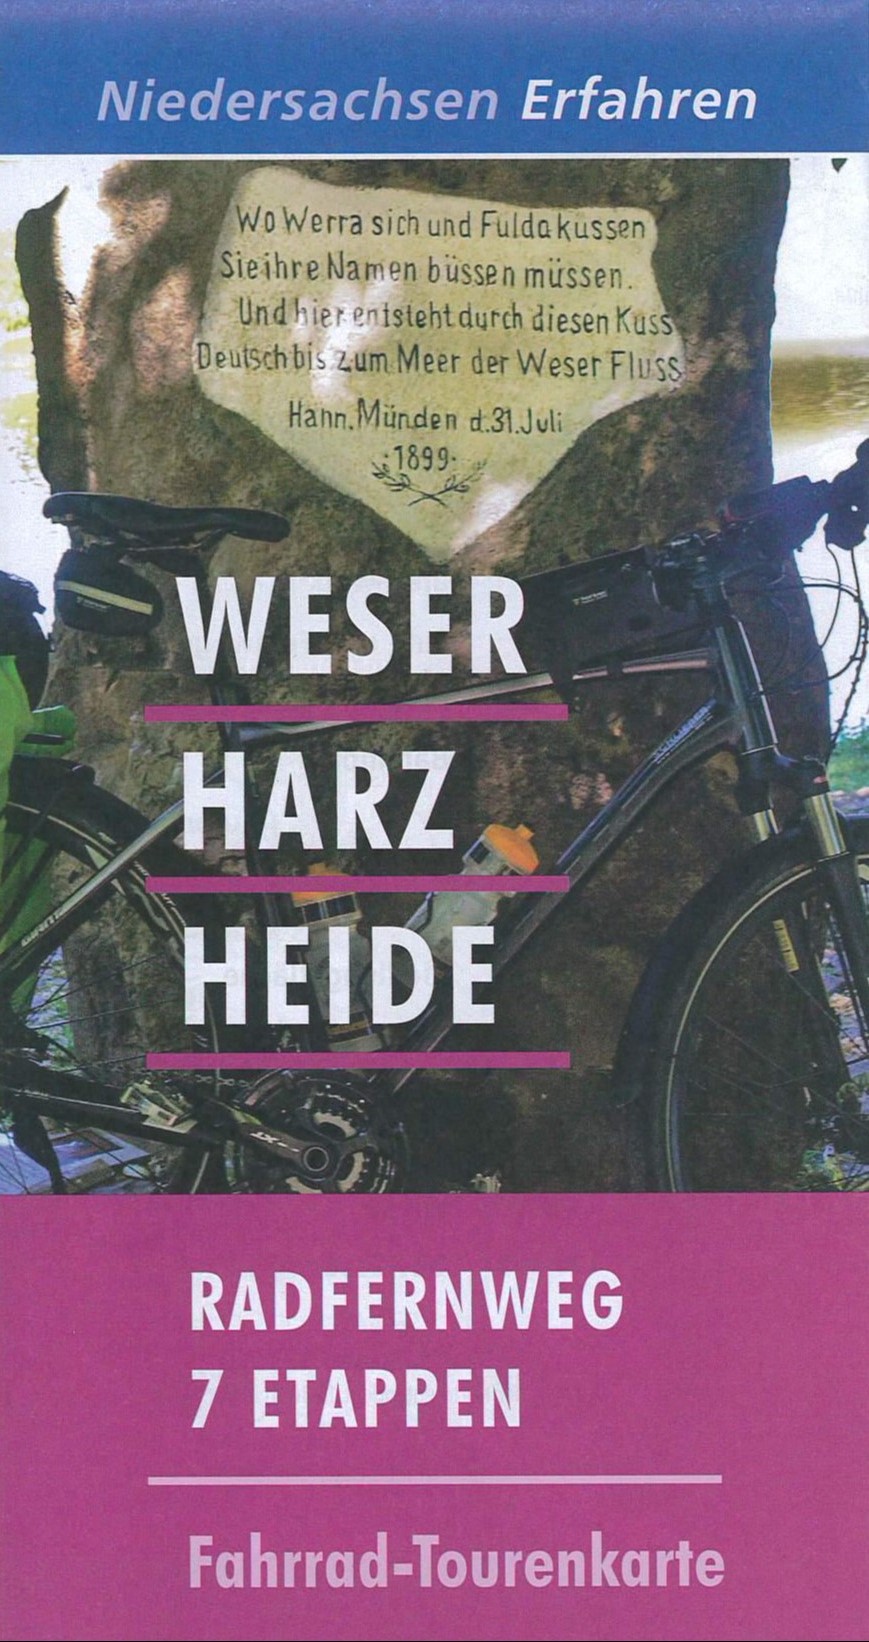 Radkarte "Weser-Harz-Heide-Radfernweg"